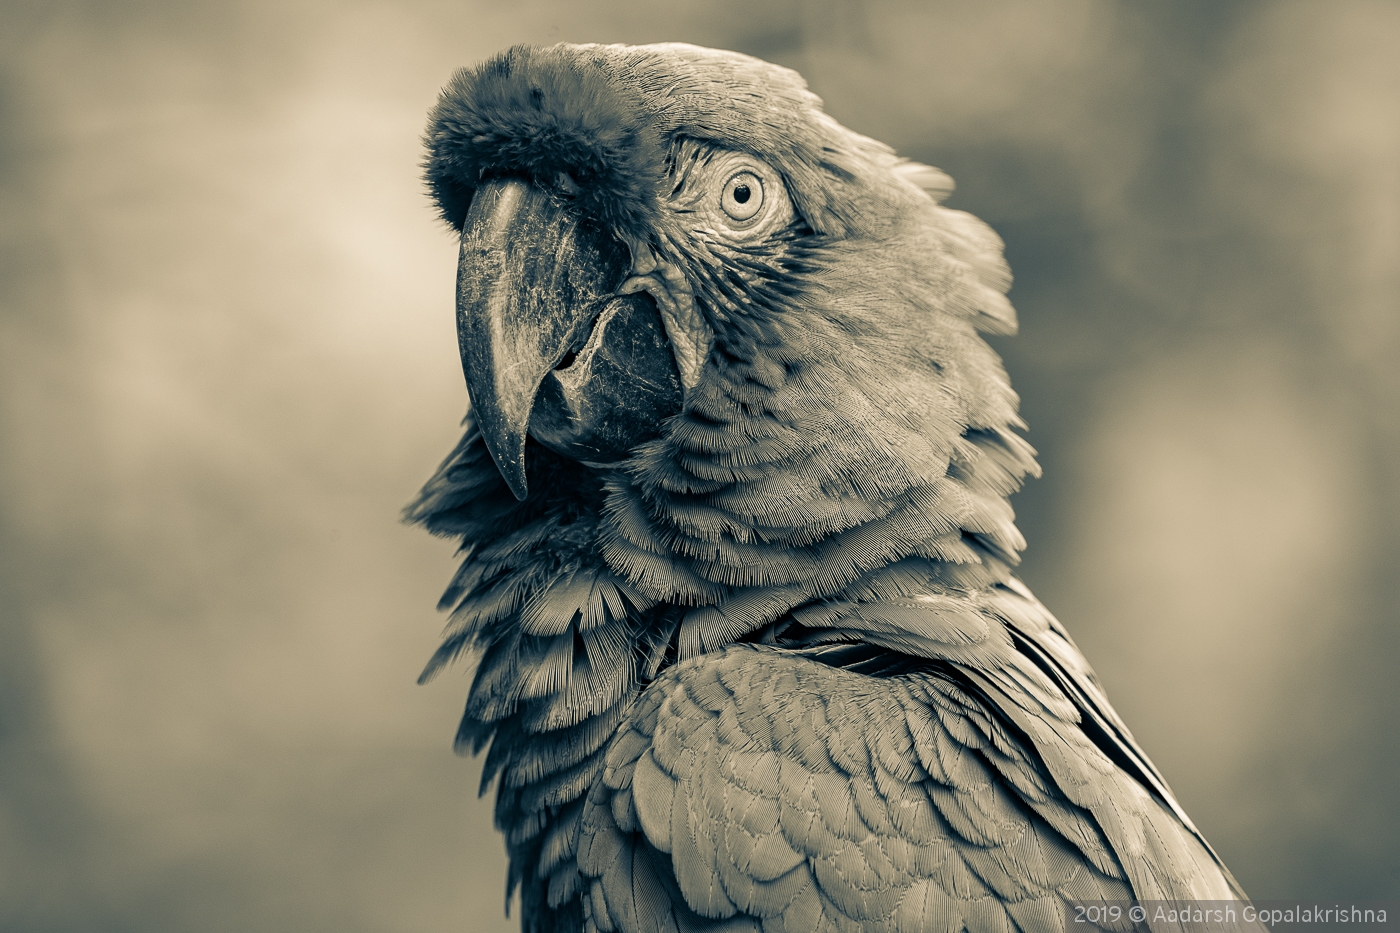 Good side of Macaw by Aadarsh Gopalakrishna